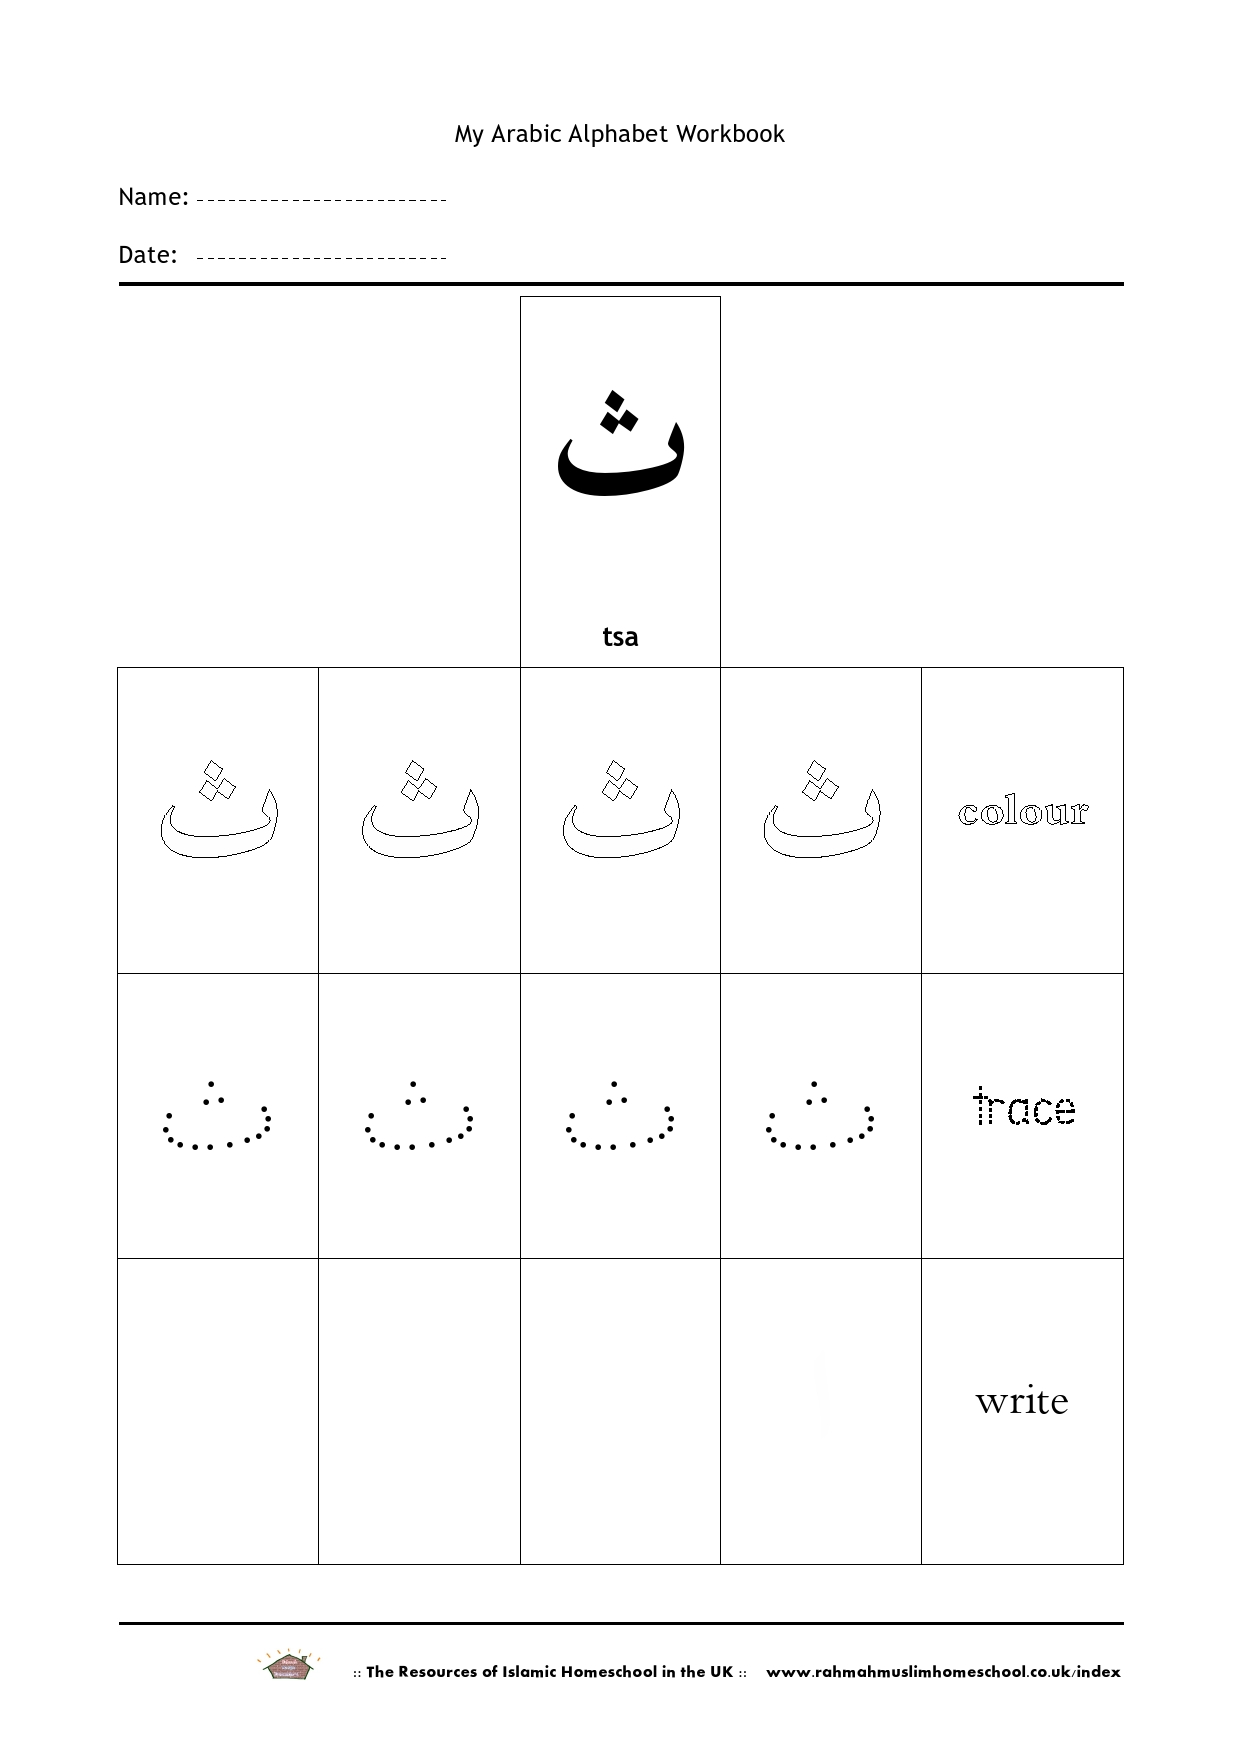 Free Arabic Alphabet Worksheet; Letter Tsa ث | The Resources